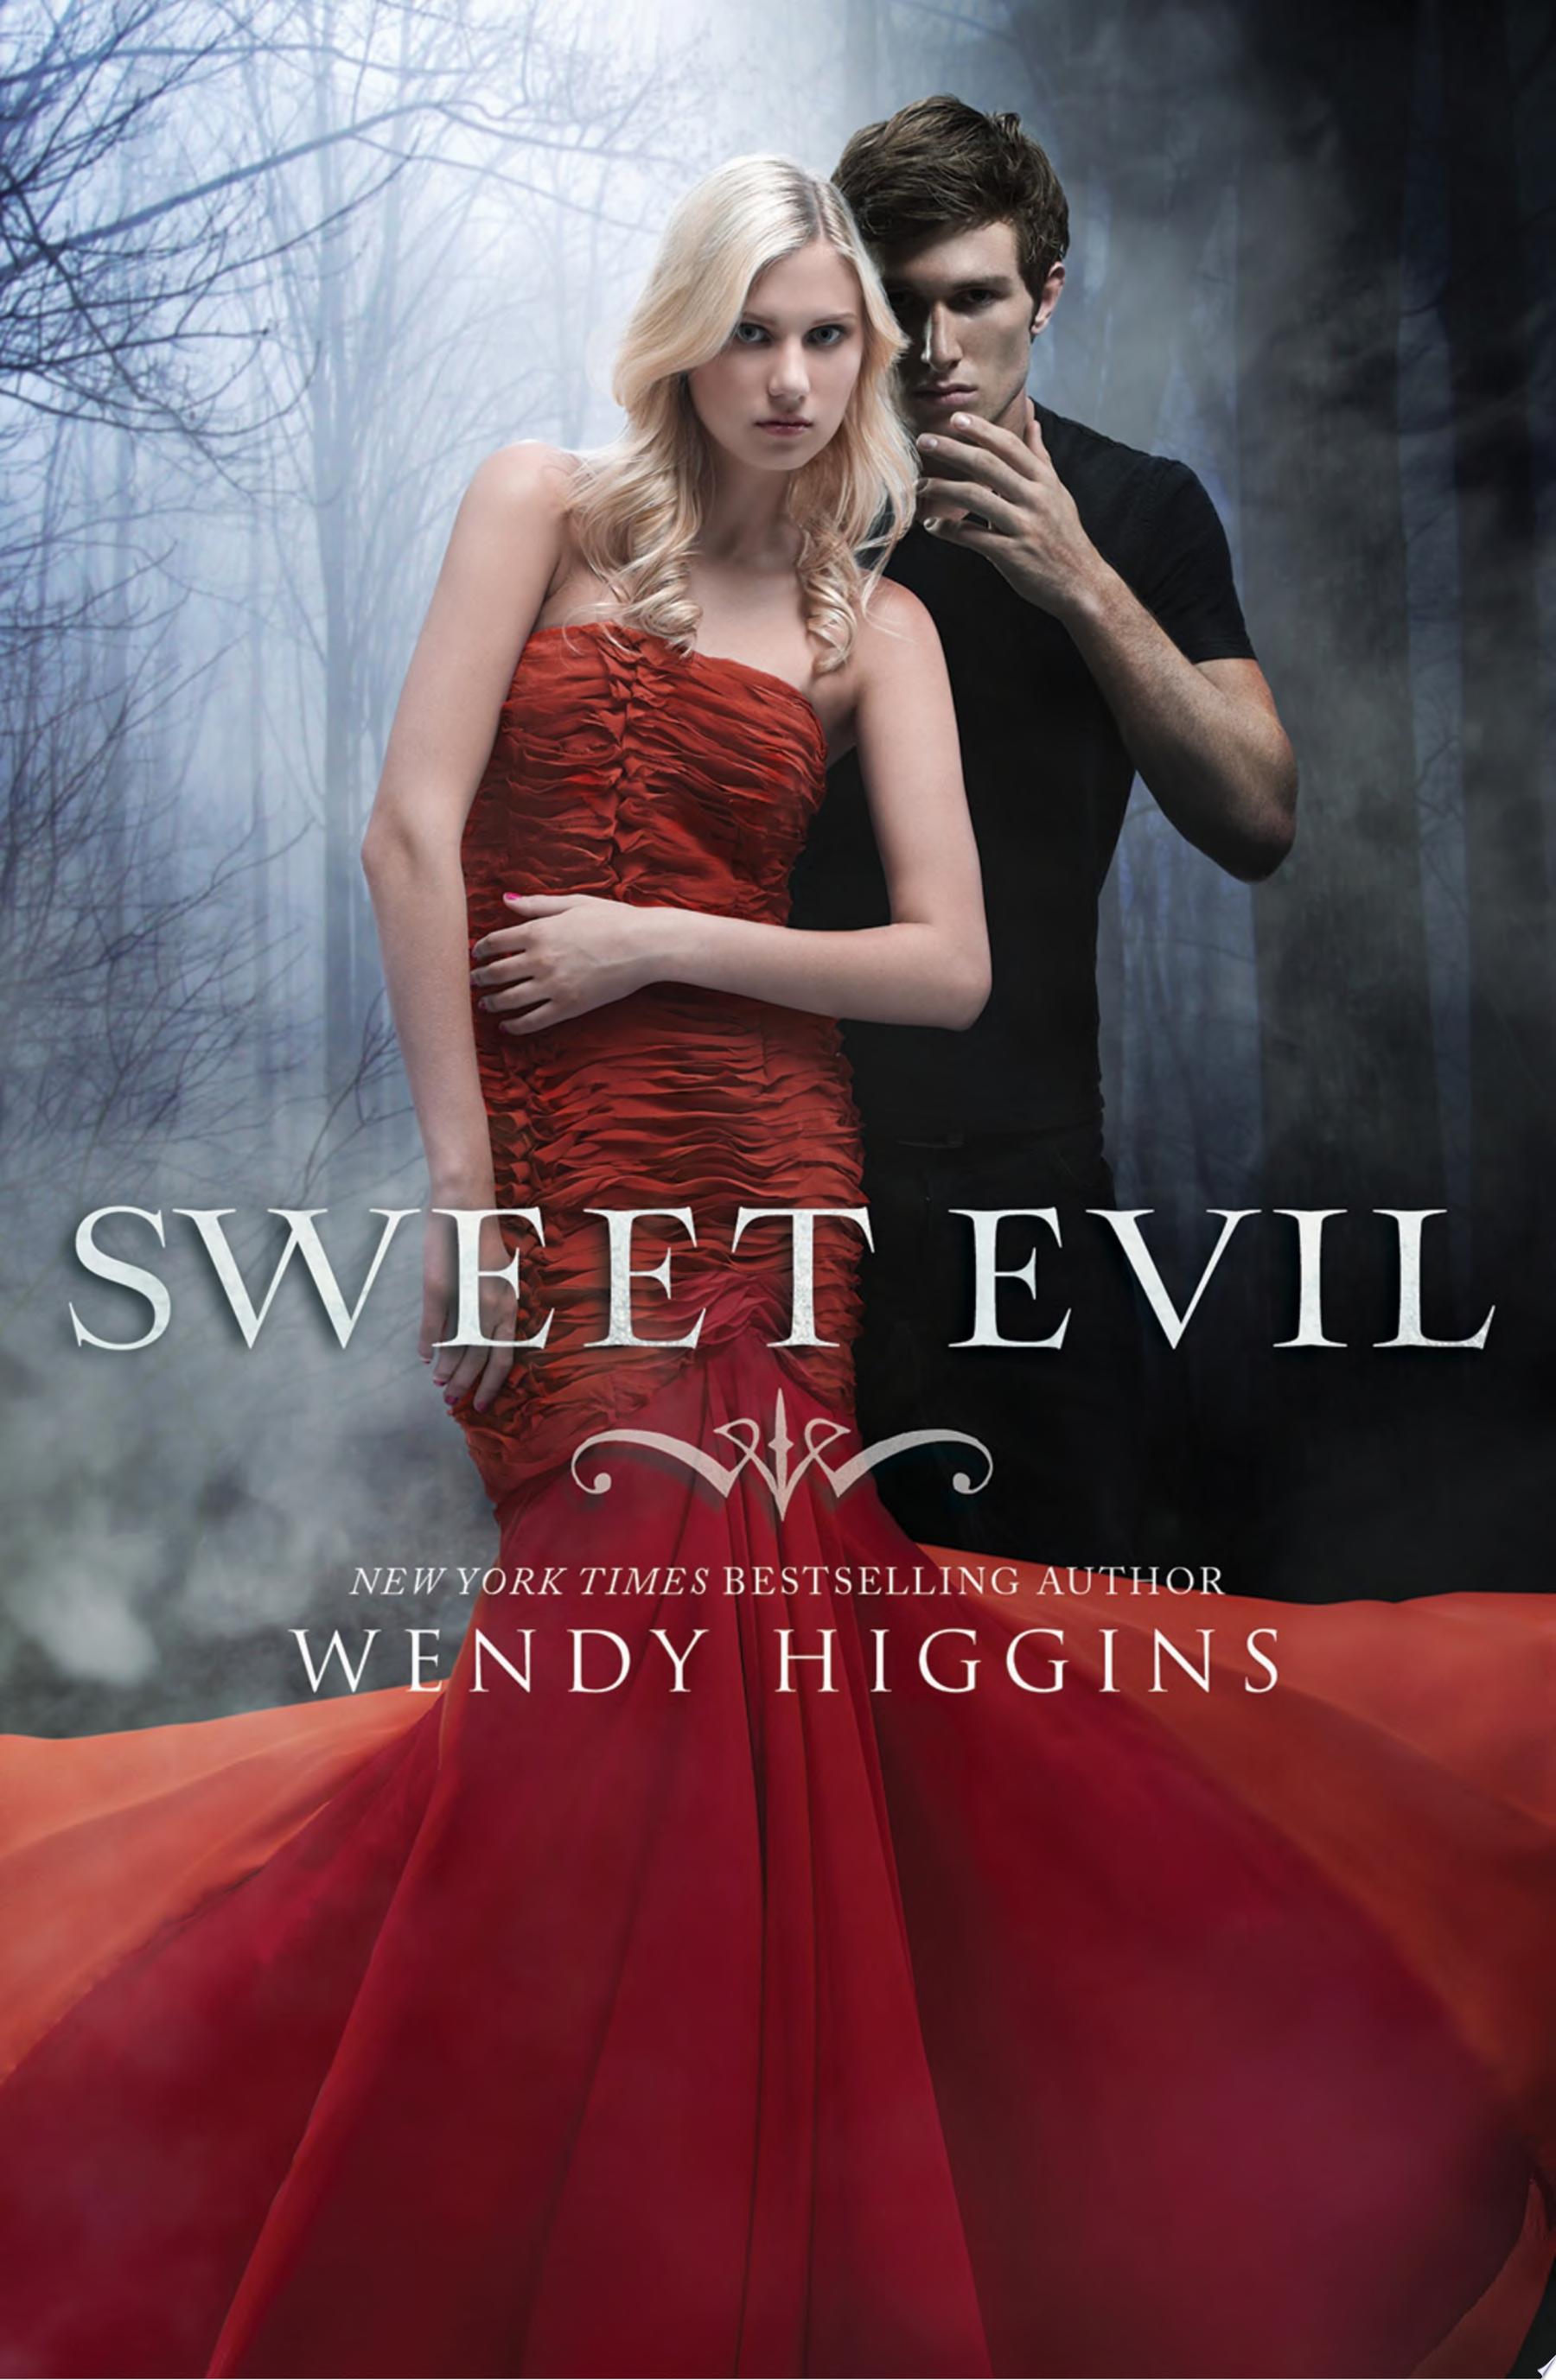 Image for "Sweet Evil"